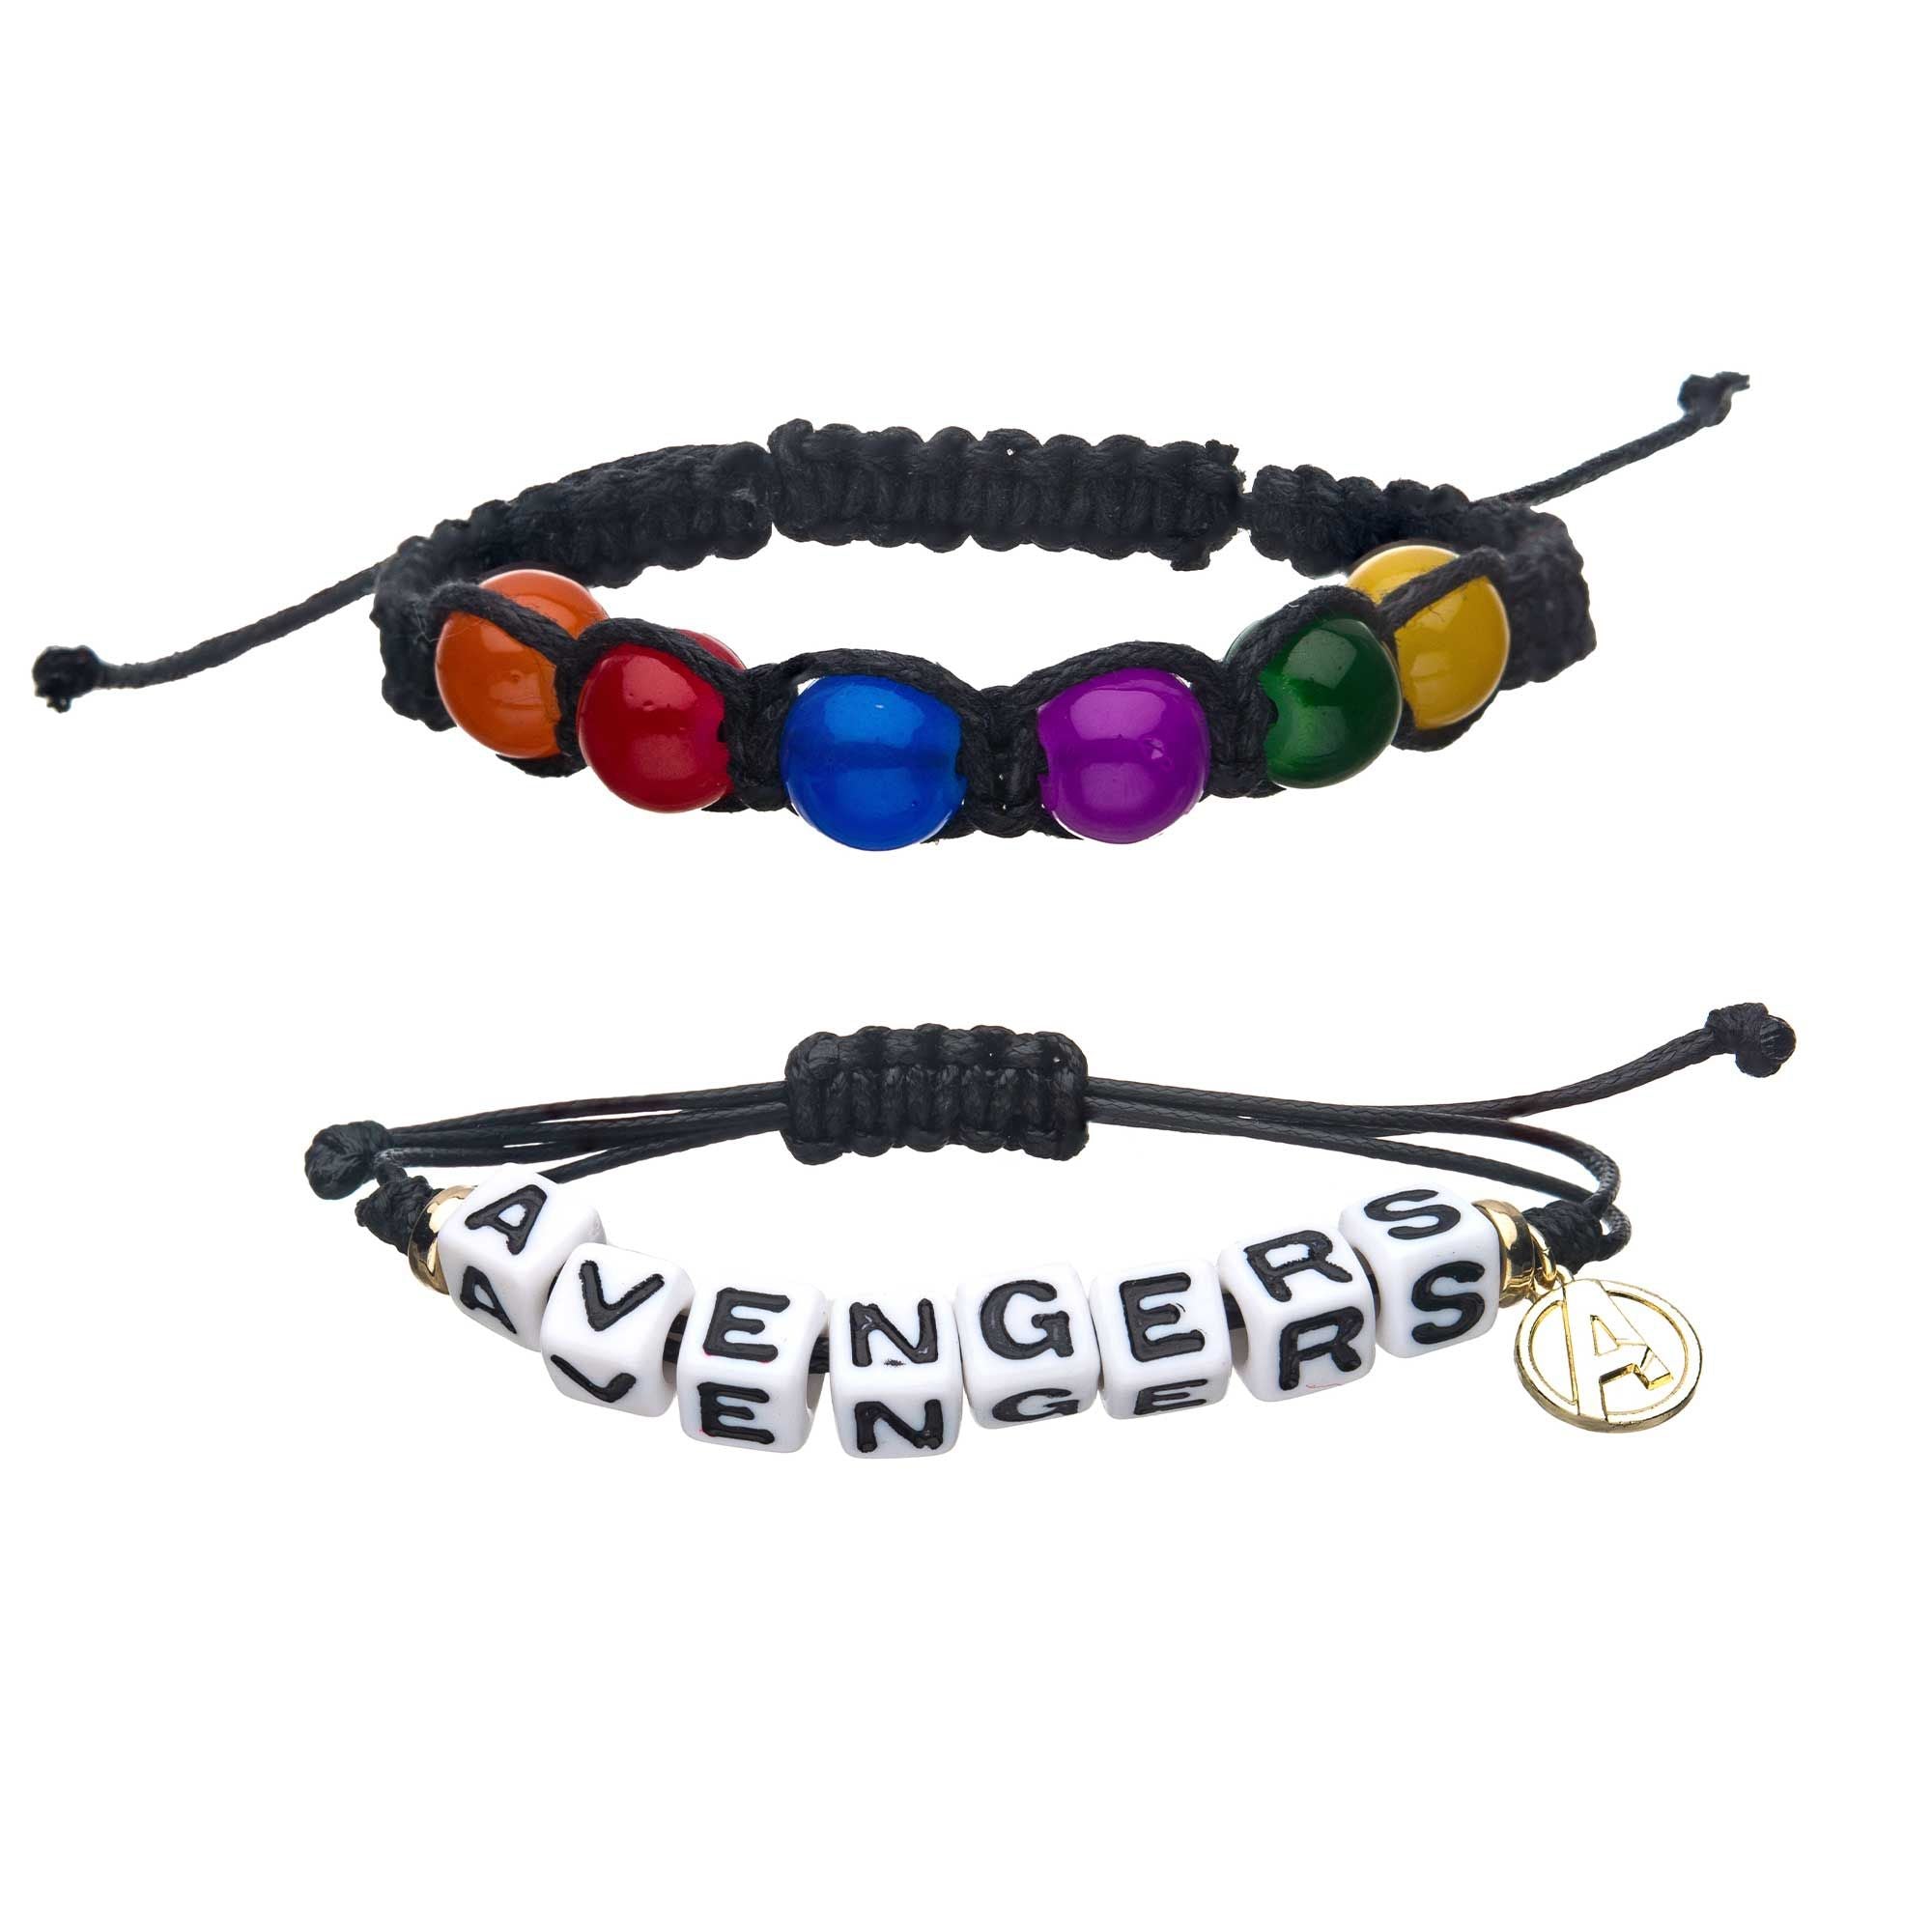 Buy Avengers Bracelet Online In India - Etsy India